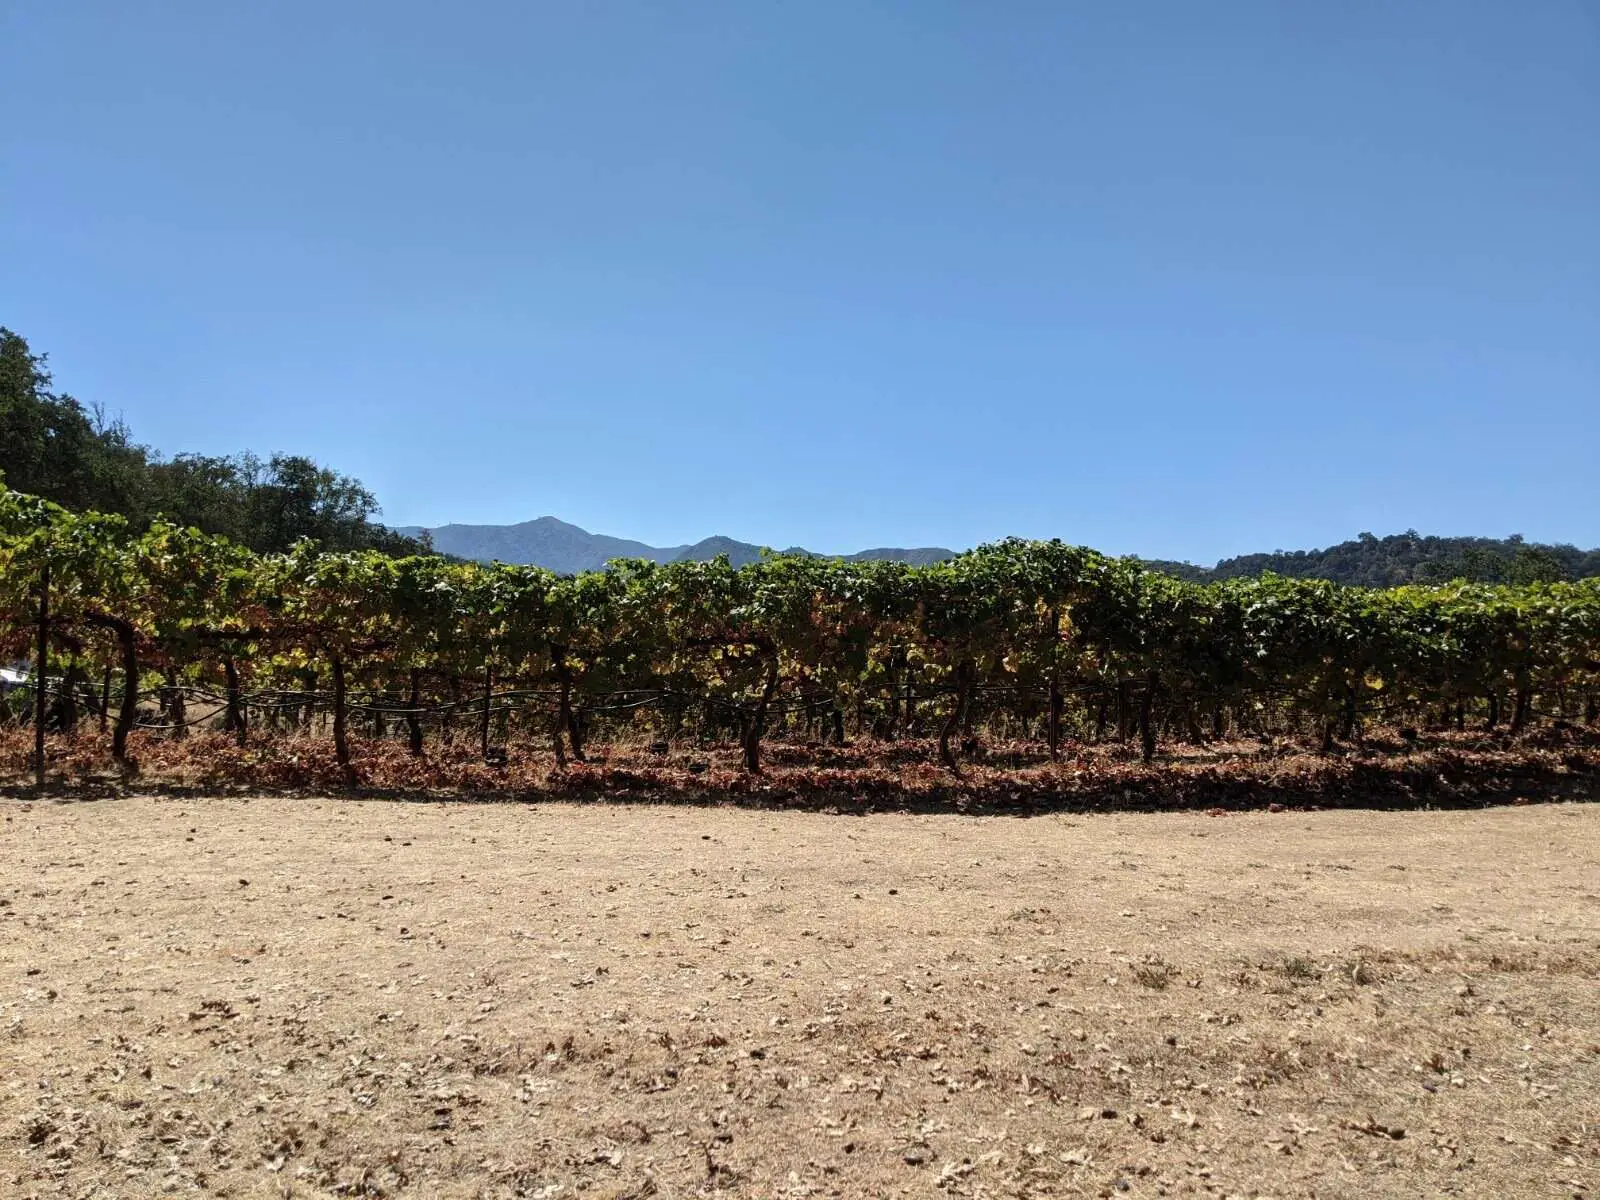 vineyard soil - vineyard